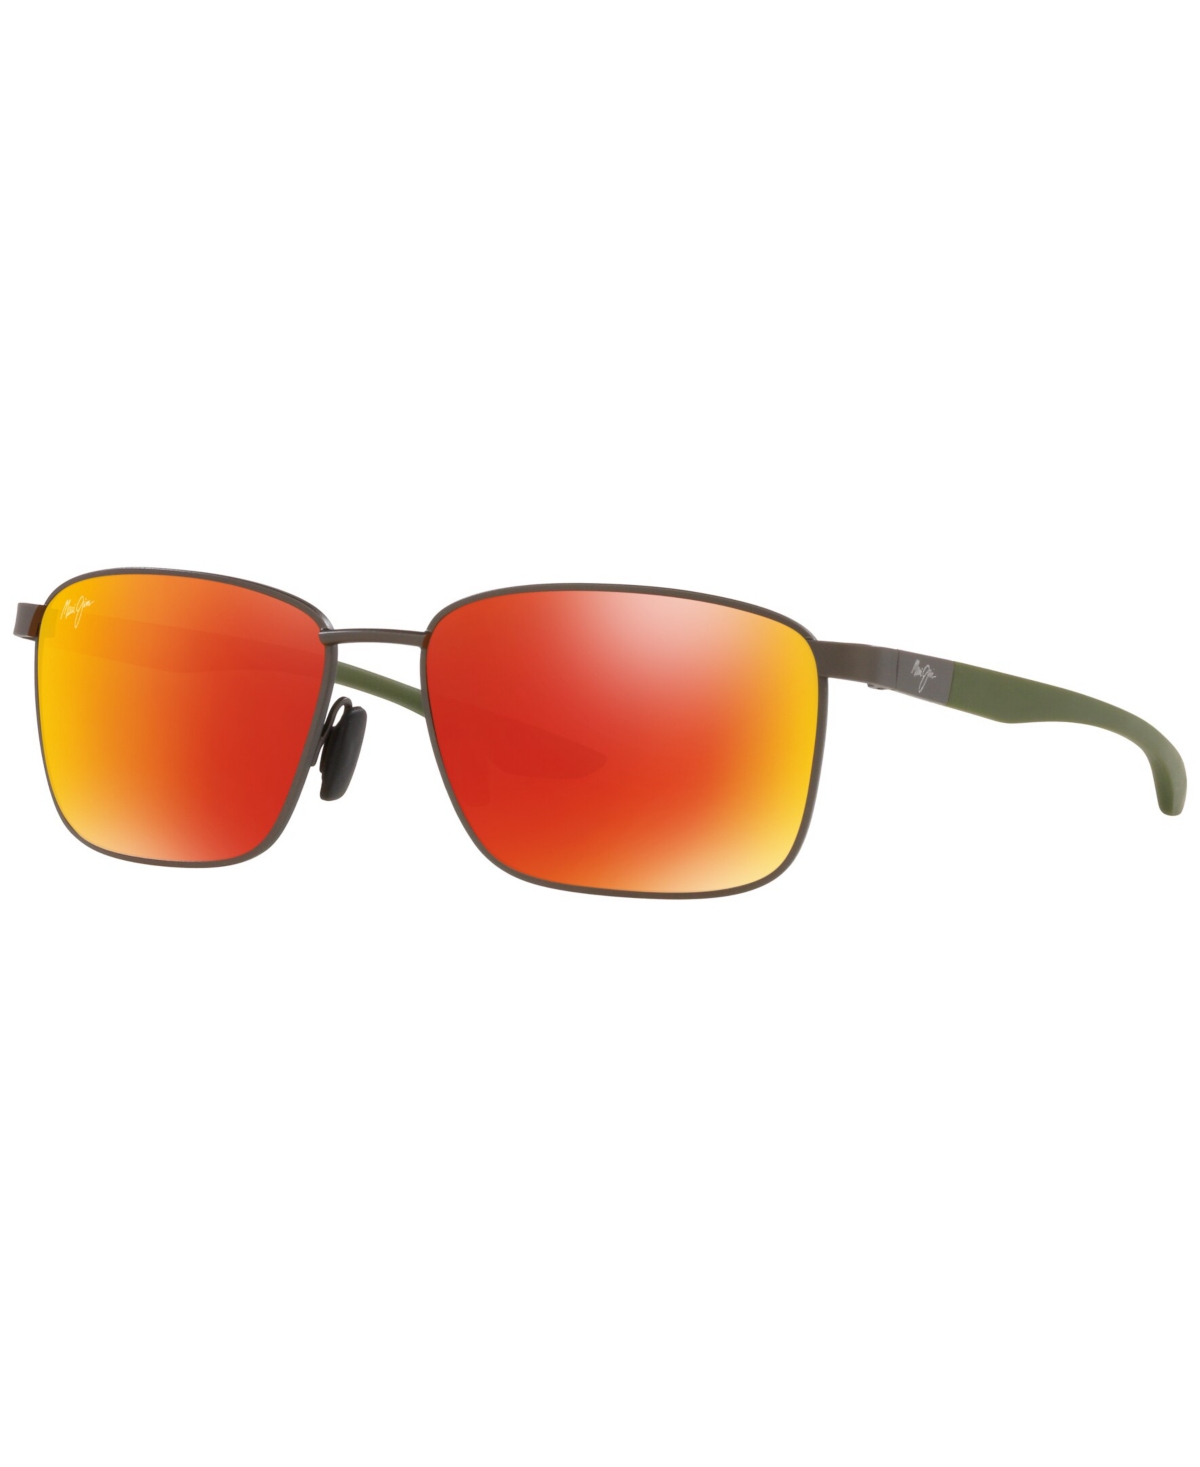 Unisex Polarized Sunglasses, MJ000676 Kaala 58 - Gunmetal Dark